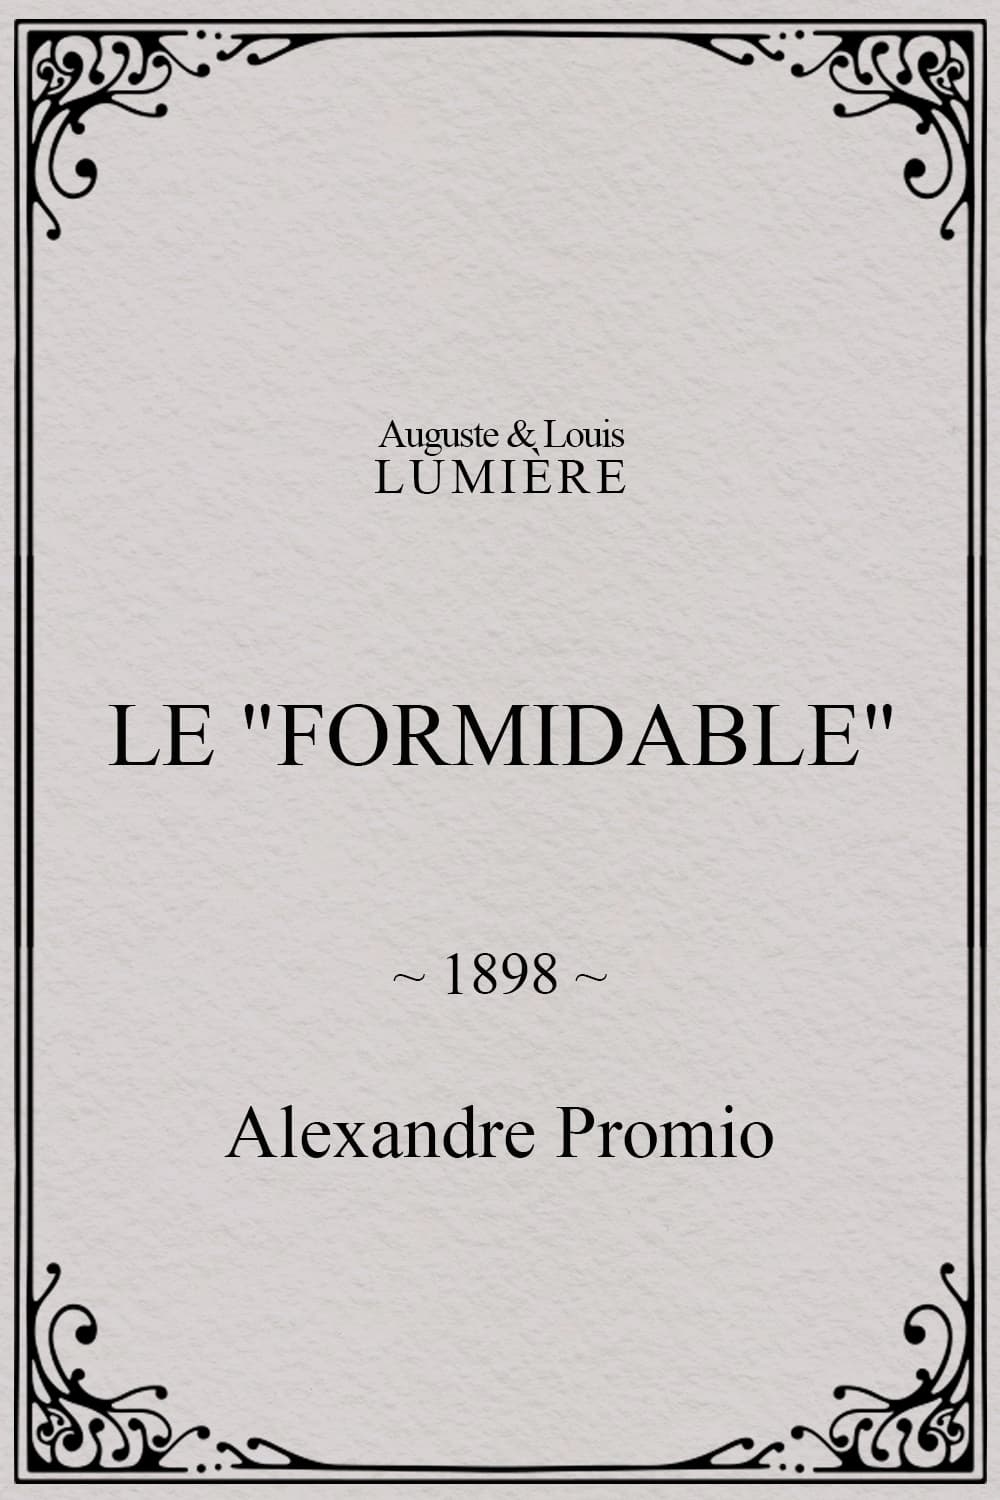 Le "Formidable" (1898)